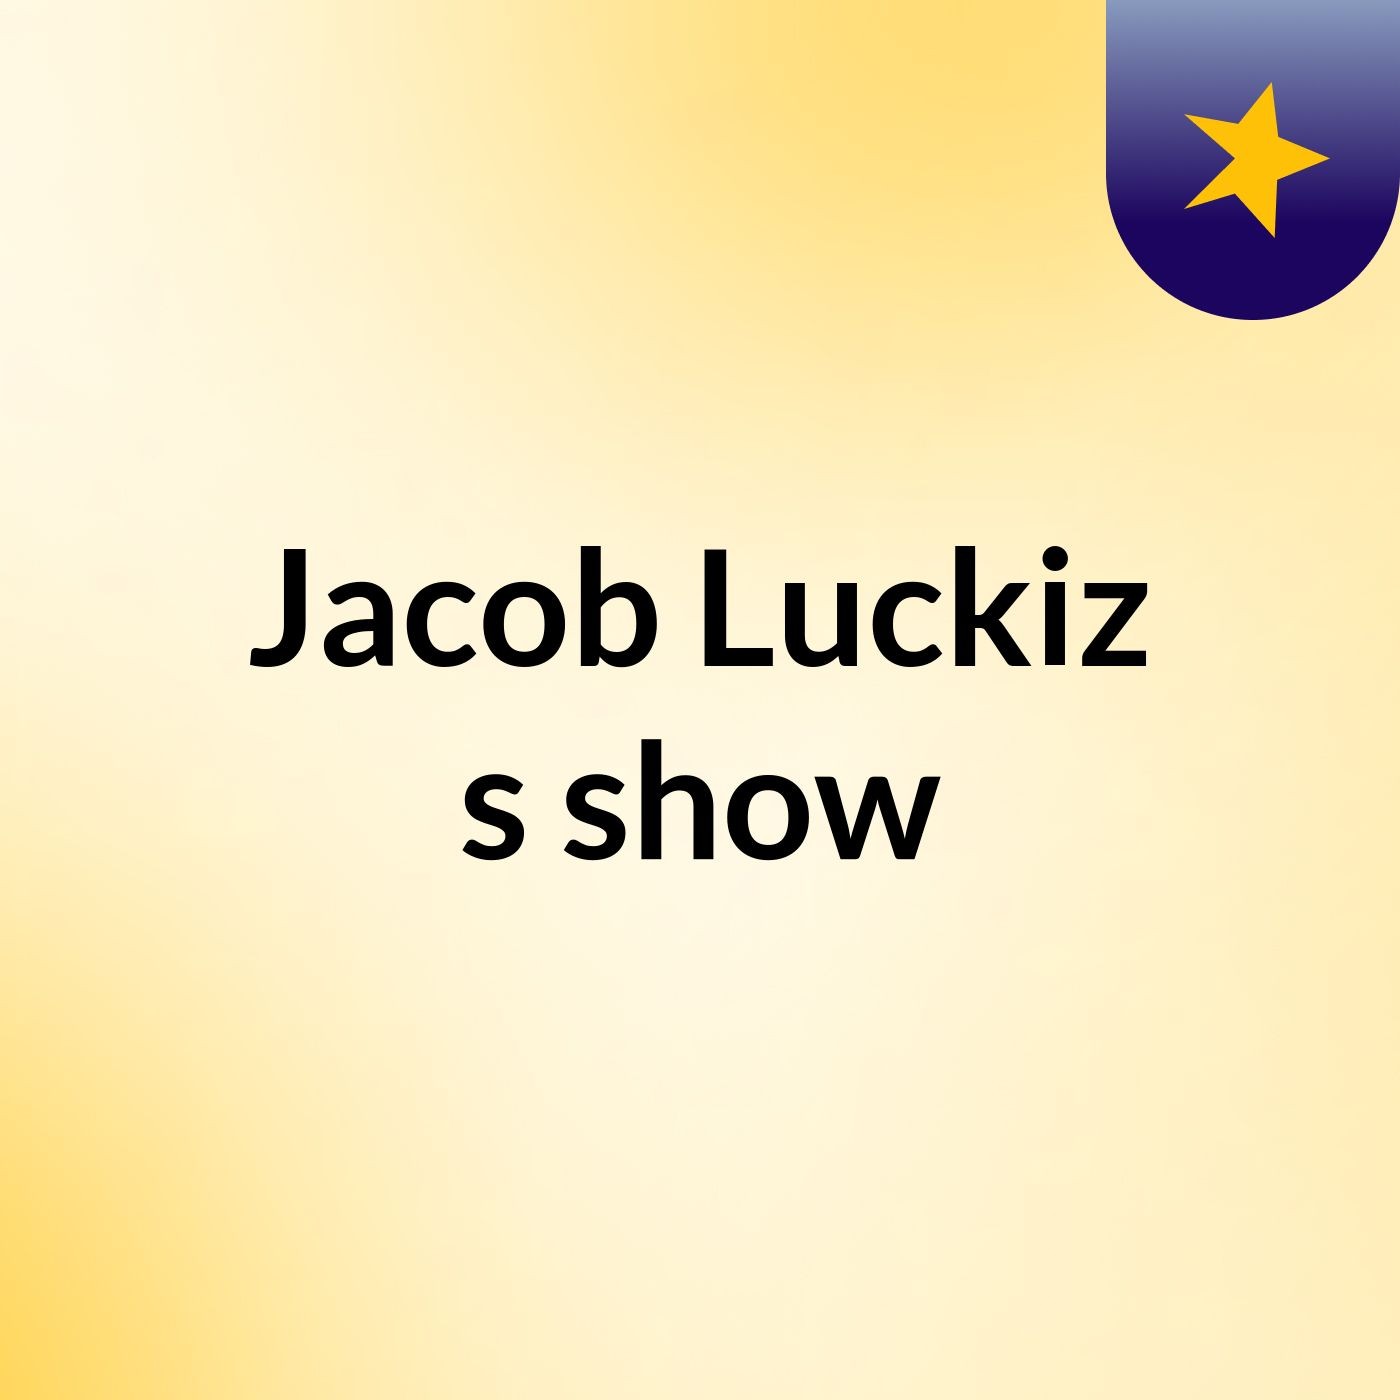 Jacob Luckiz's show